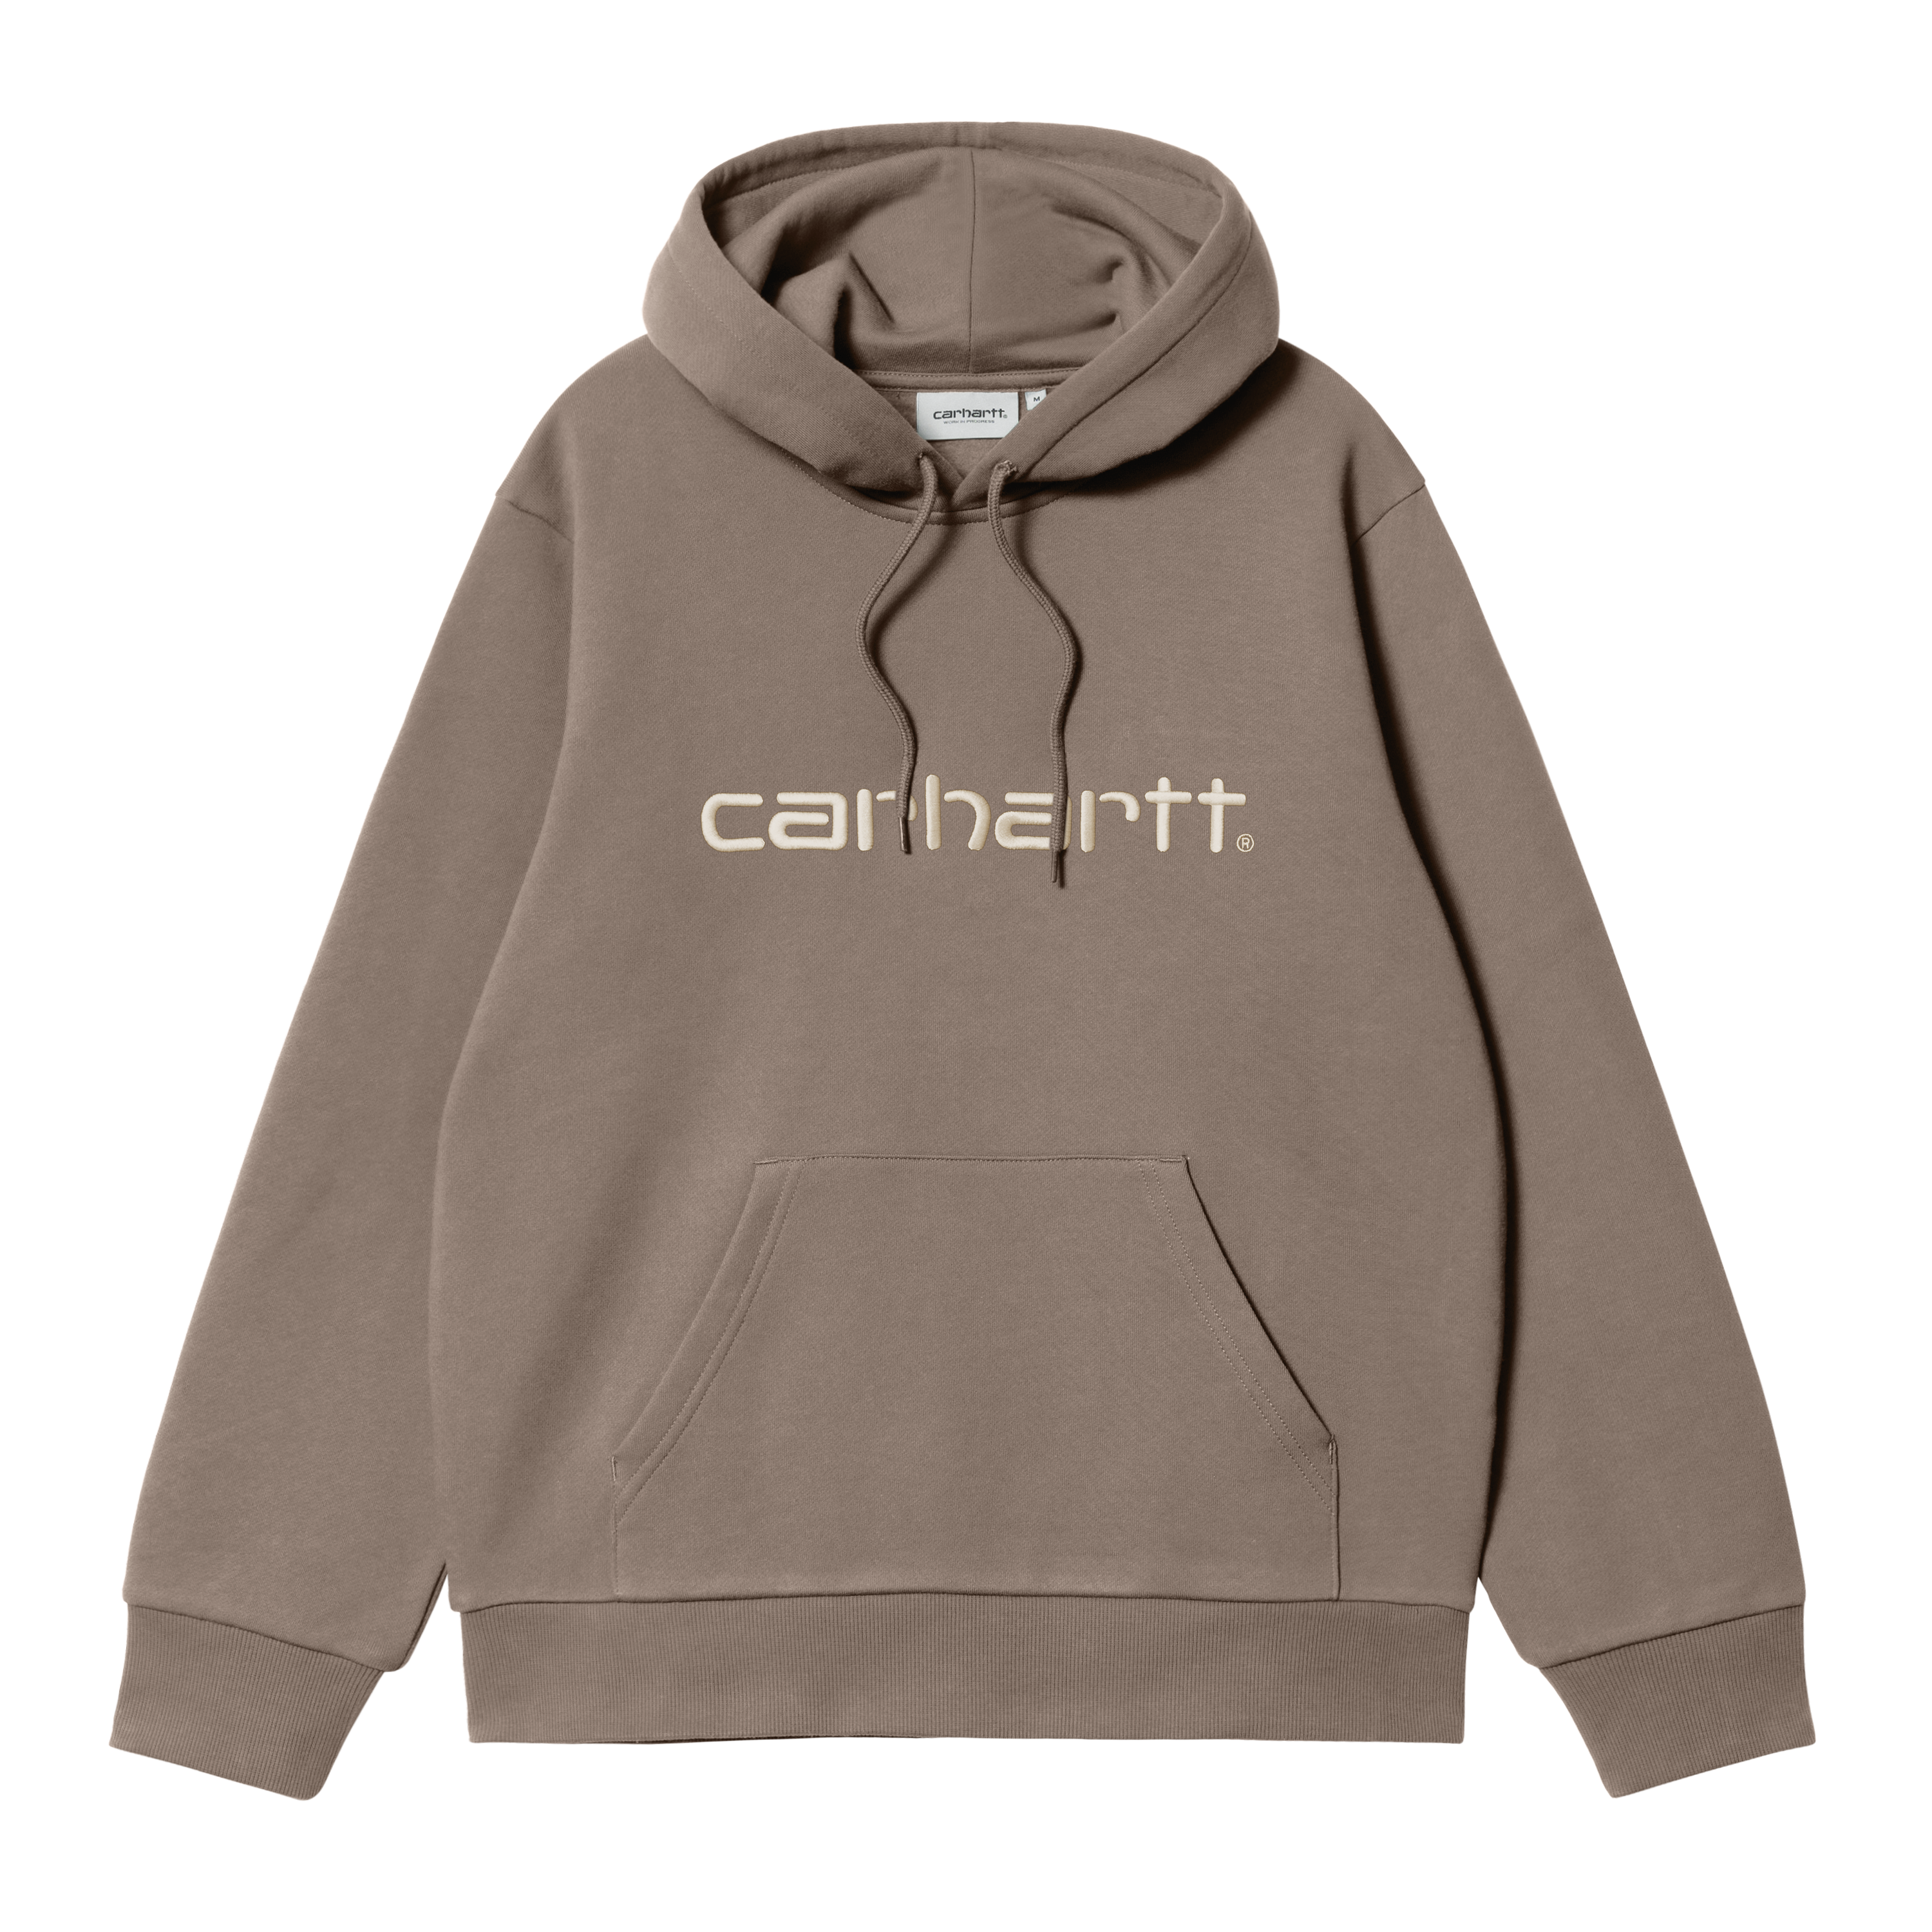 Carhartt WIP Hooded Carhartt Sweatshirt em Castanho